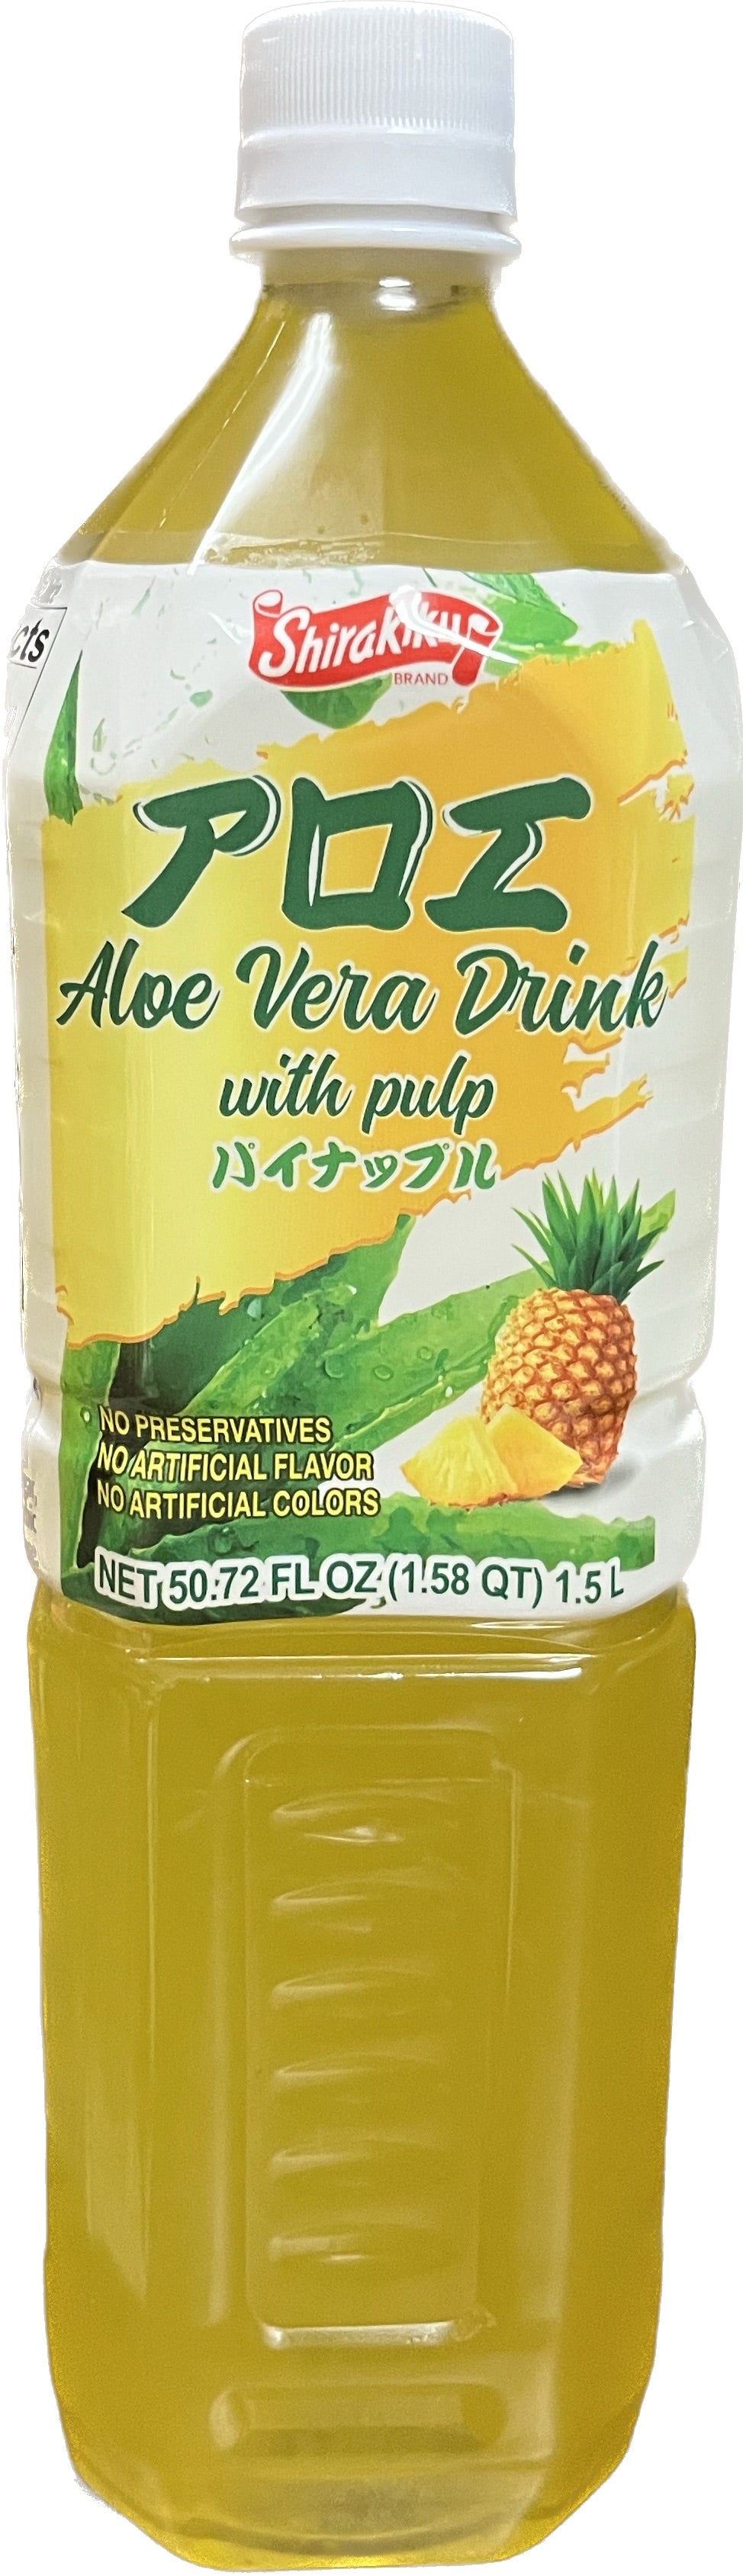 Shirakiku Piña Aloe Vera Bebida con pulpa - 1.5L